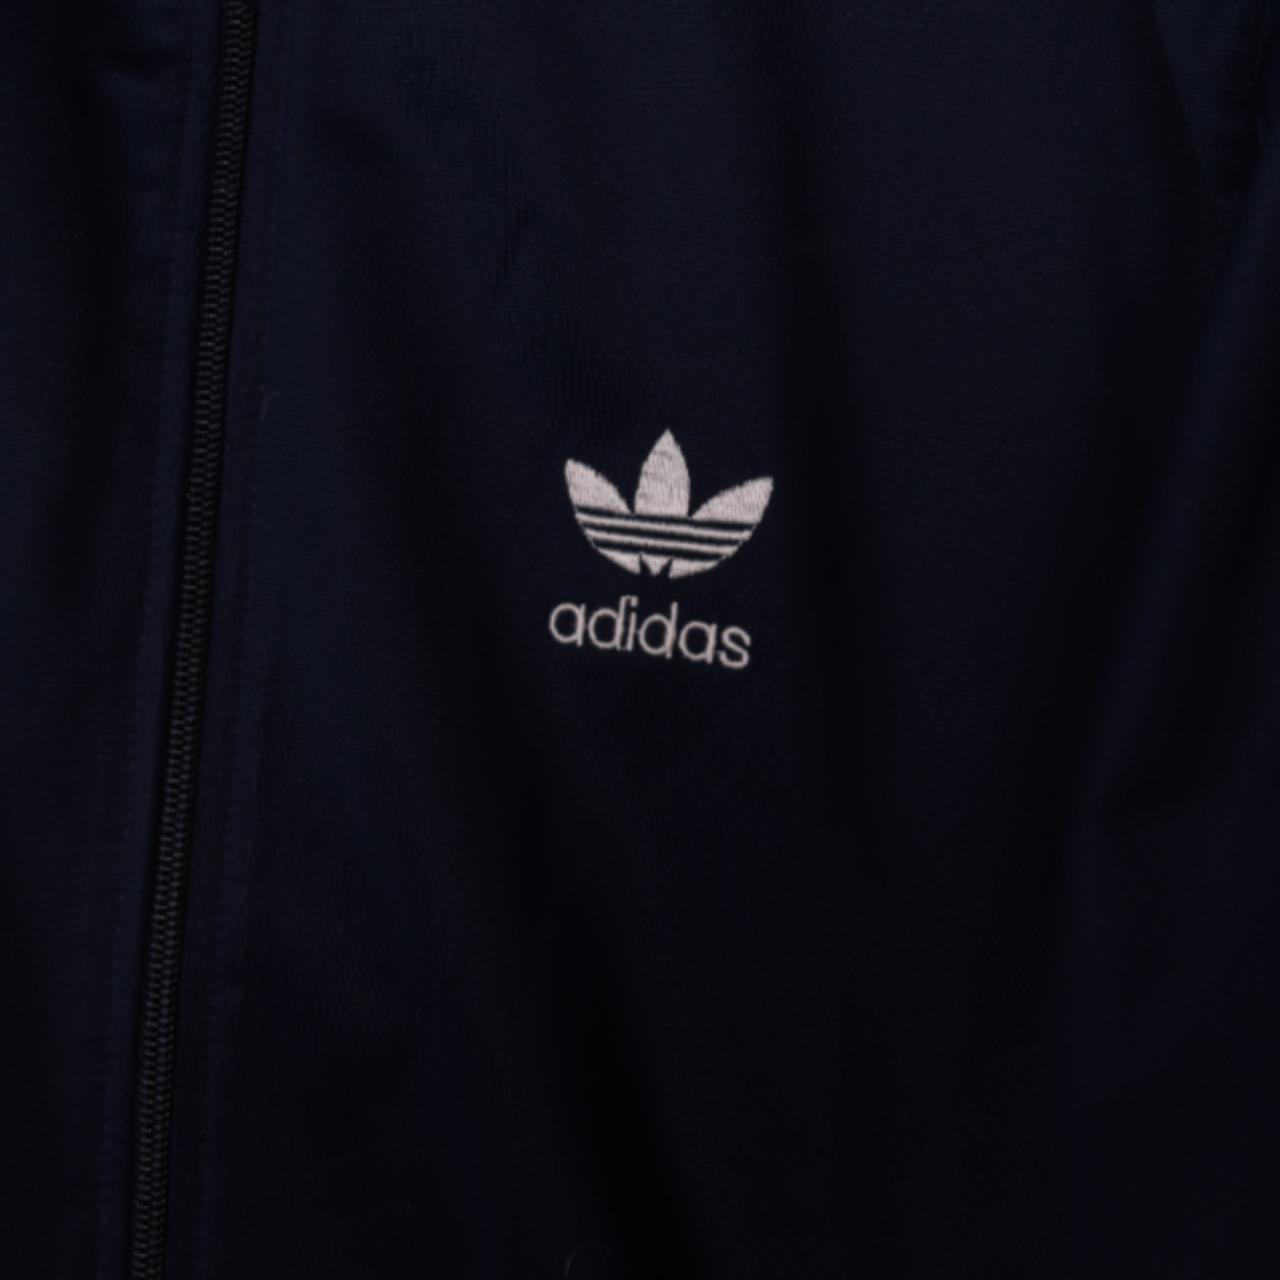 Vintage Adidas Embroidered Logo Zip-Up Jacket in... - Depop